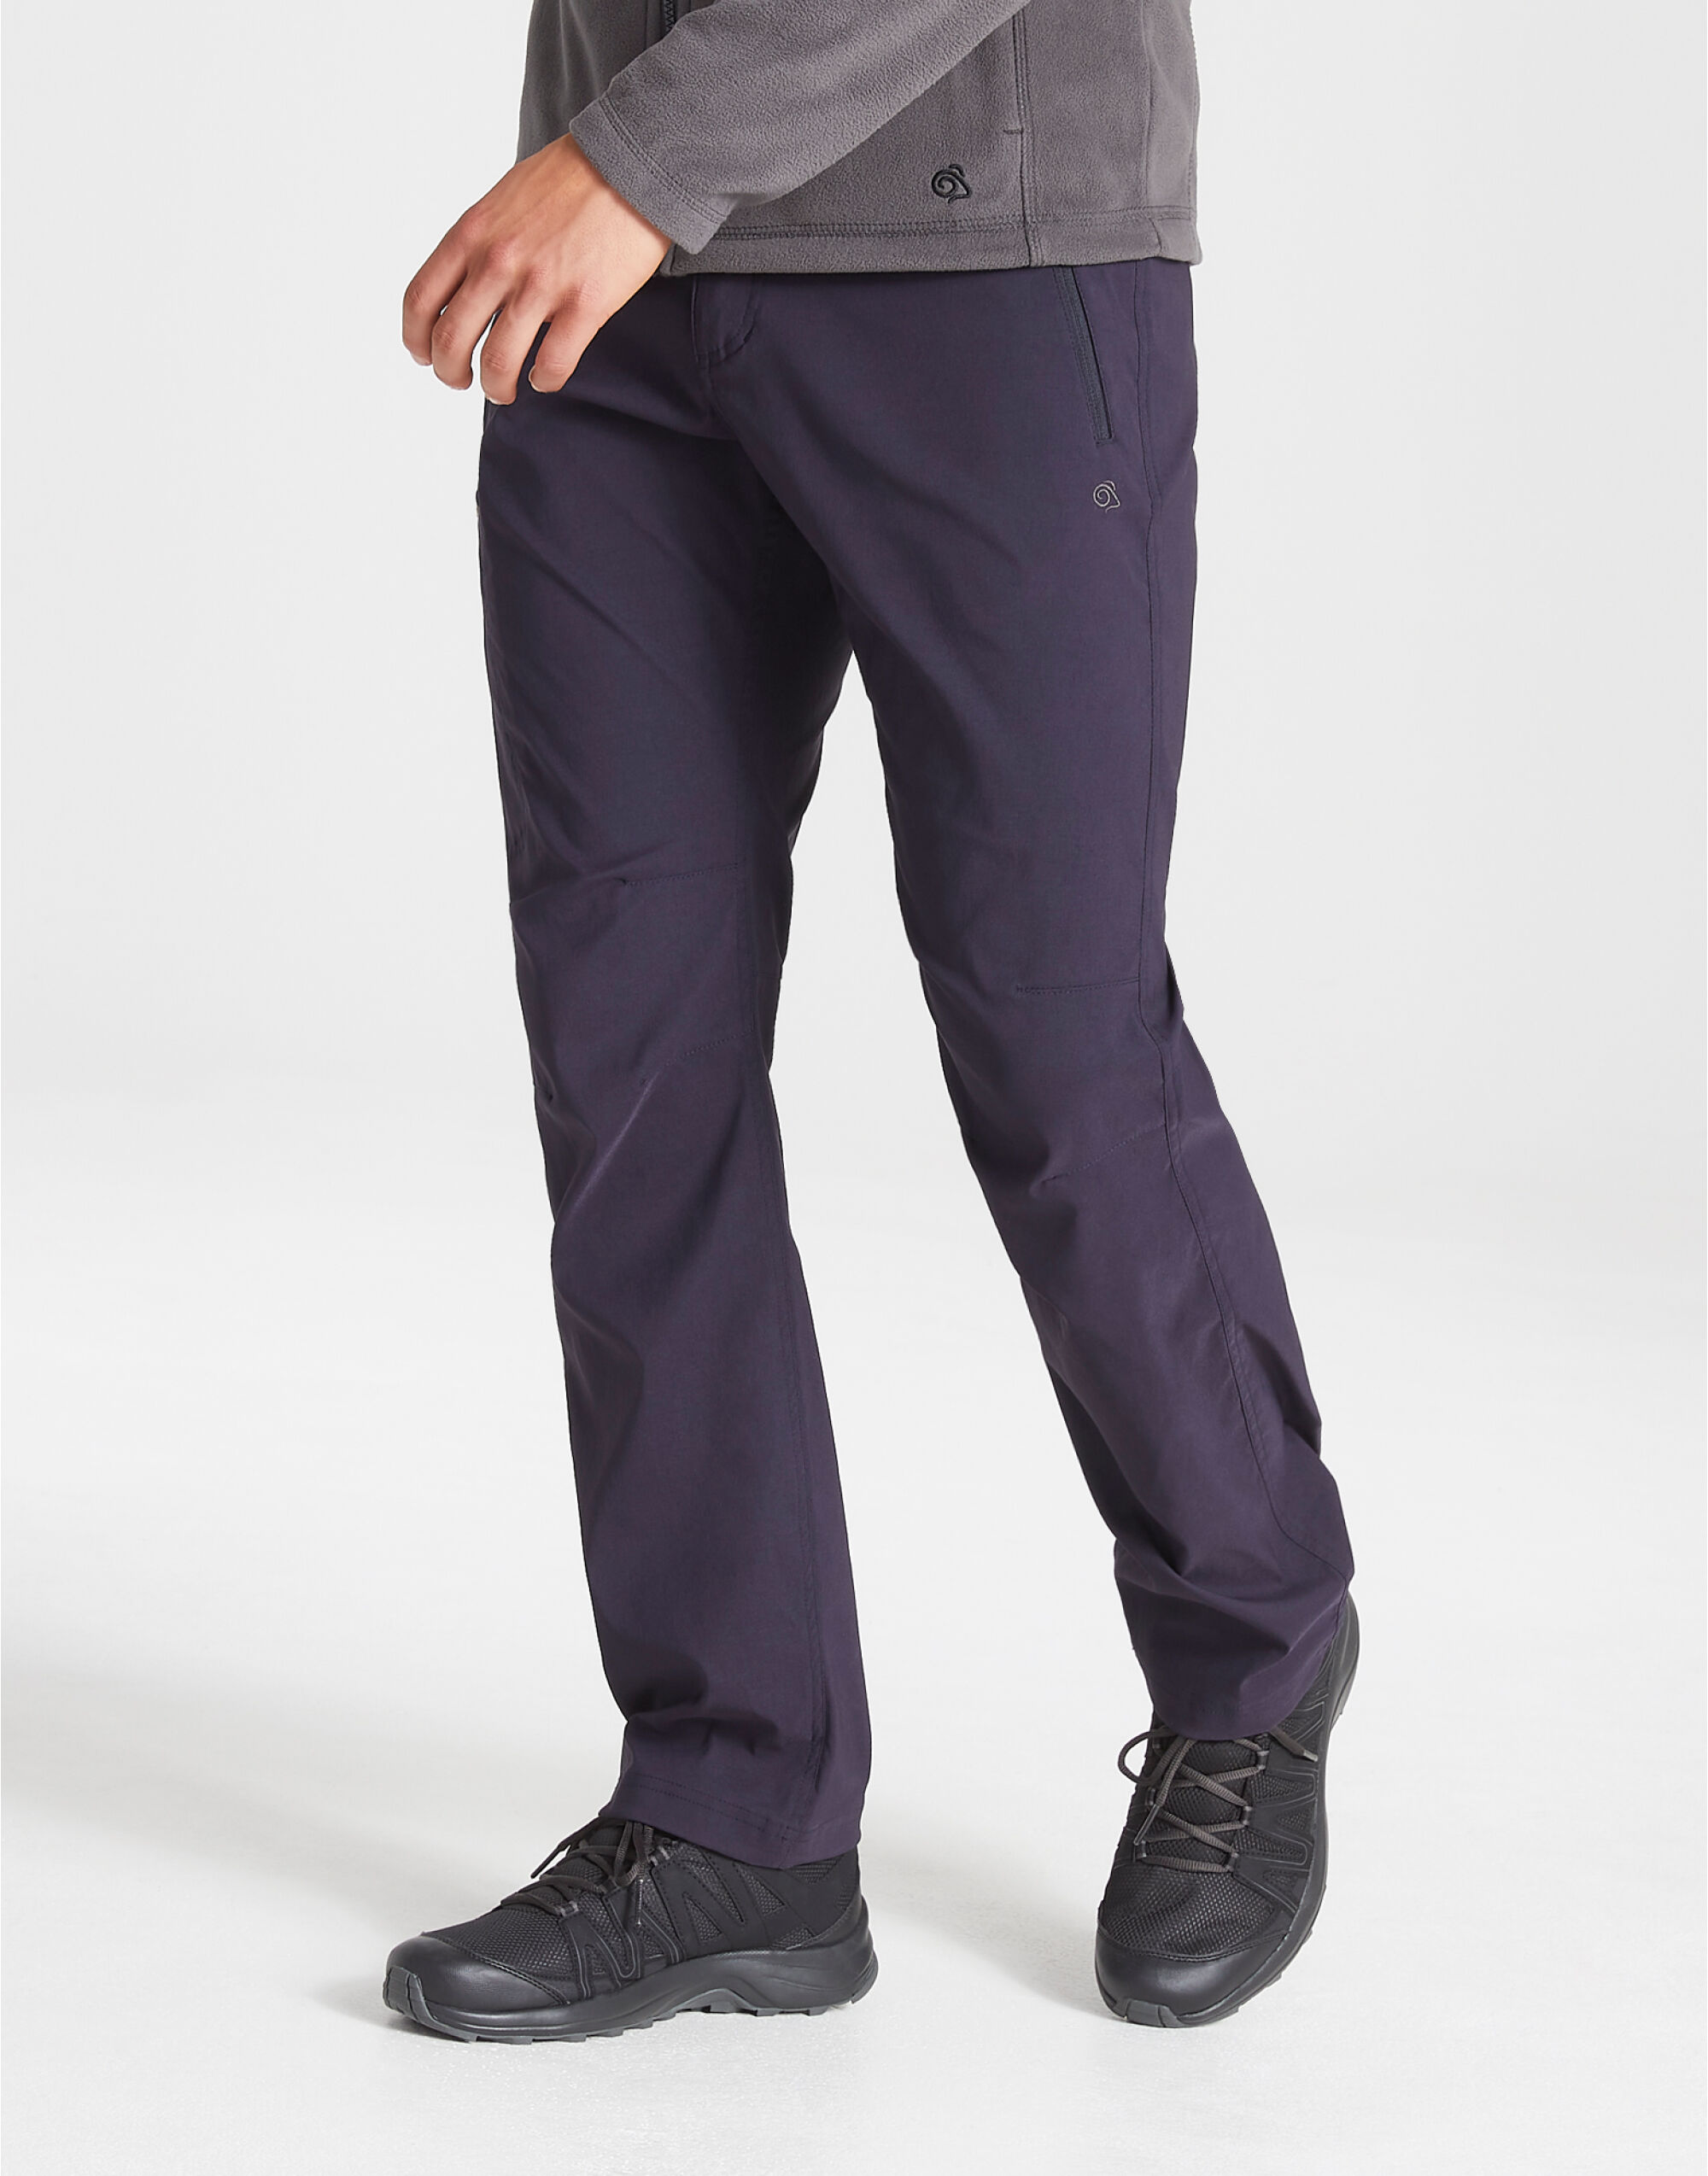 Men's Expert Kiwi Pro II Stretch Trousers (Long)